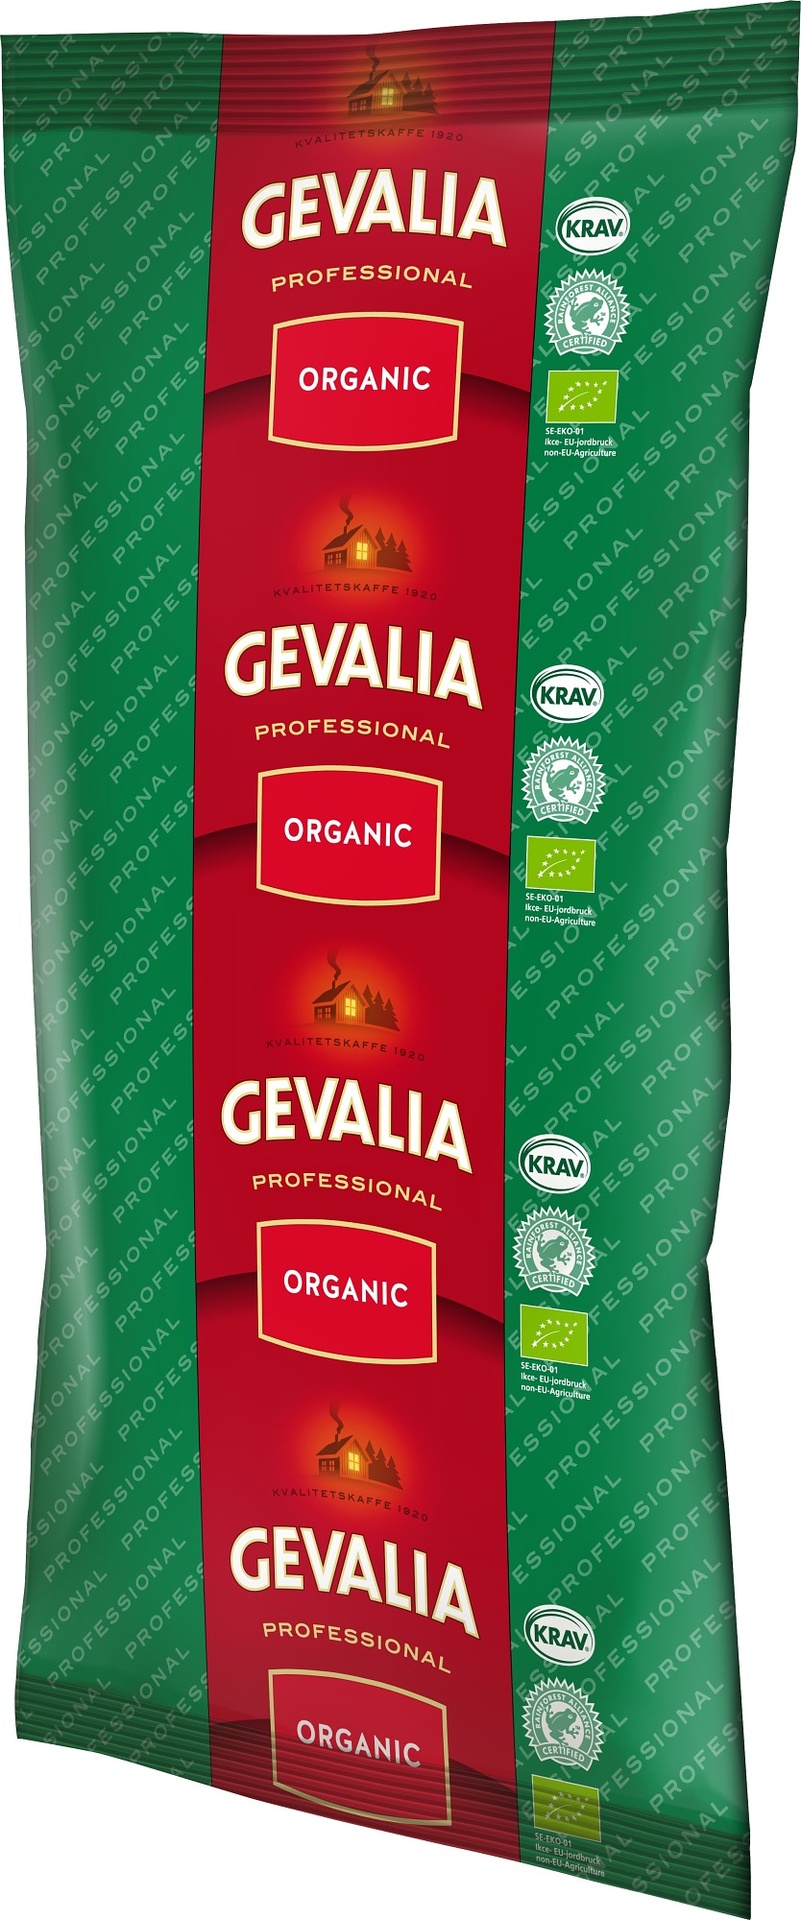 [8563624] Kaffe Gevalia Organic Krav 1kg